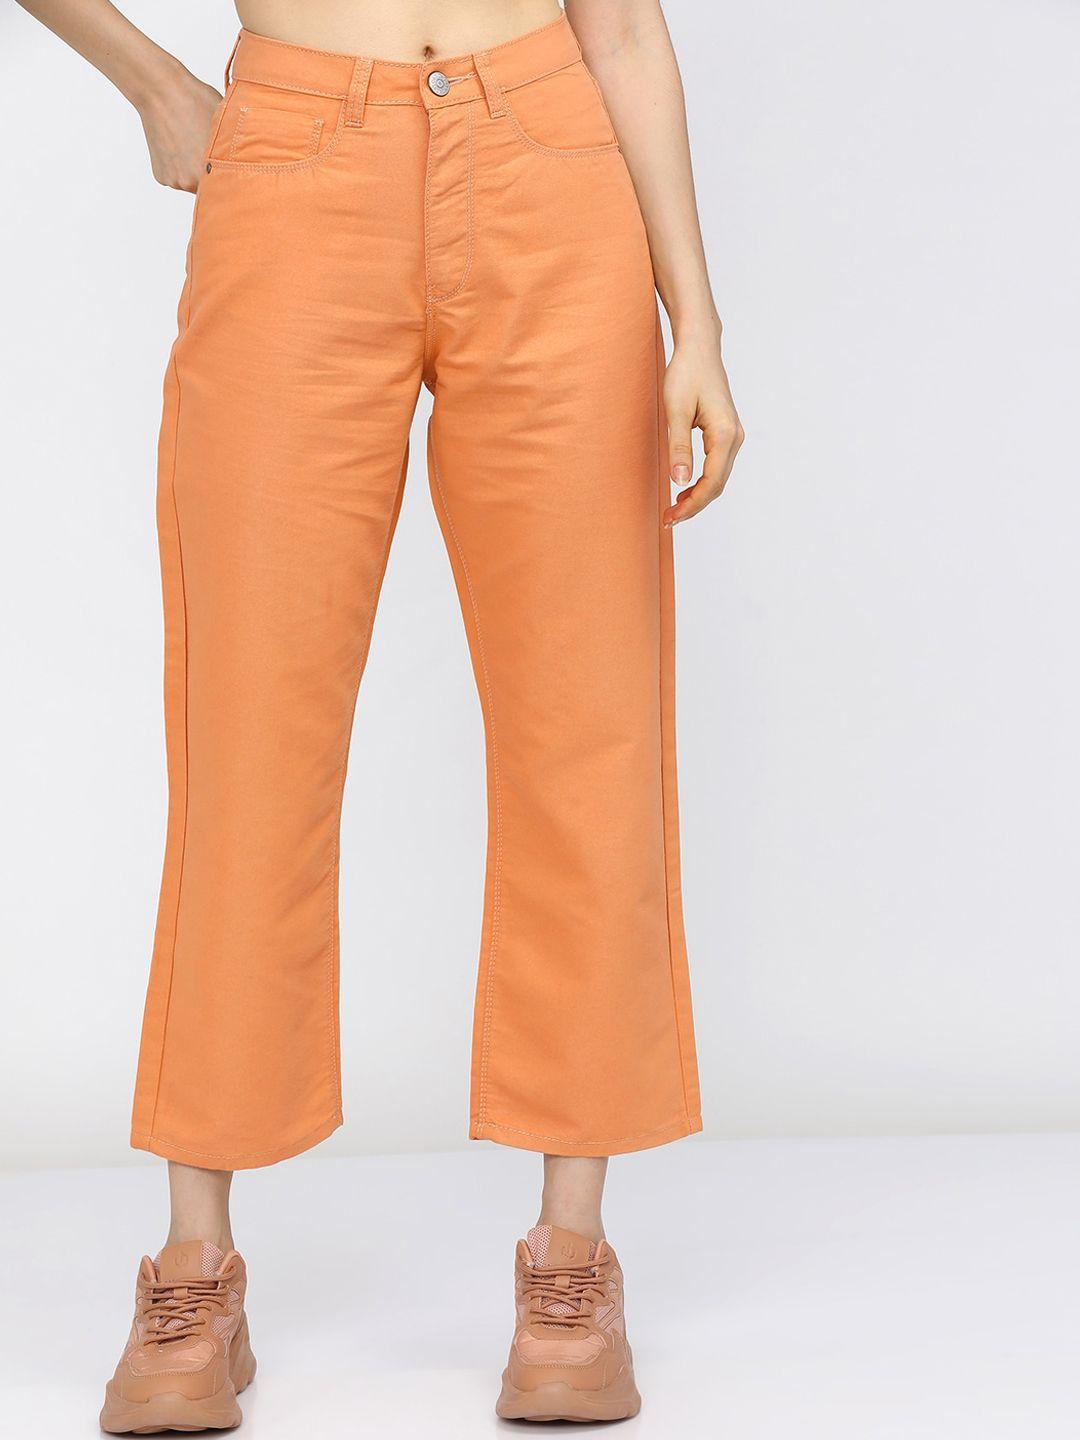 tokyo talkies women orange wide leg stretchable jeans